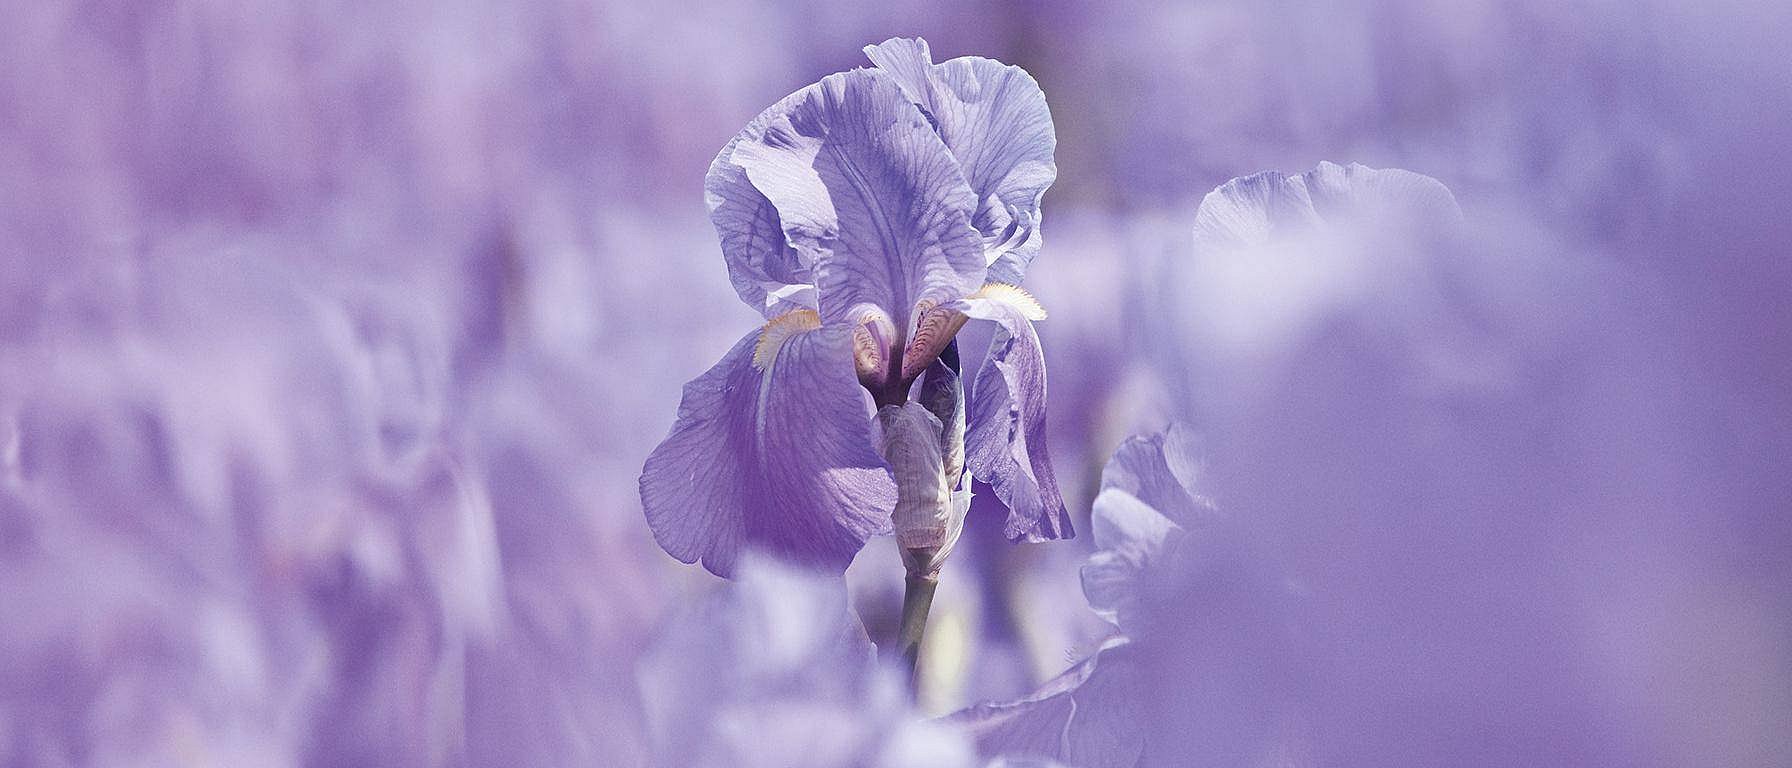 Iris Blüte von nahem